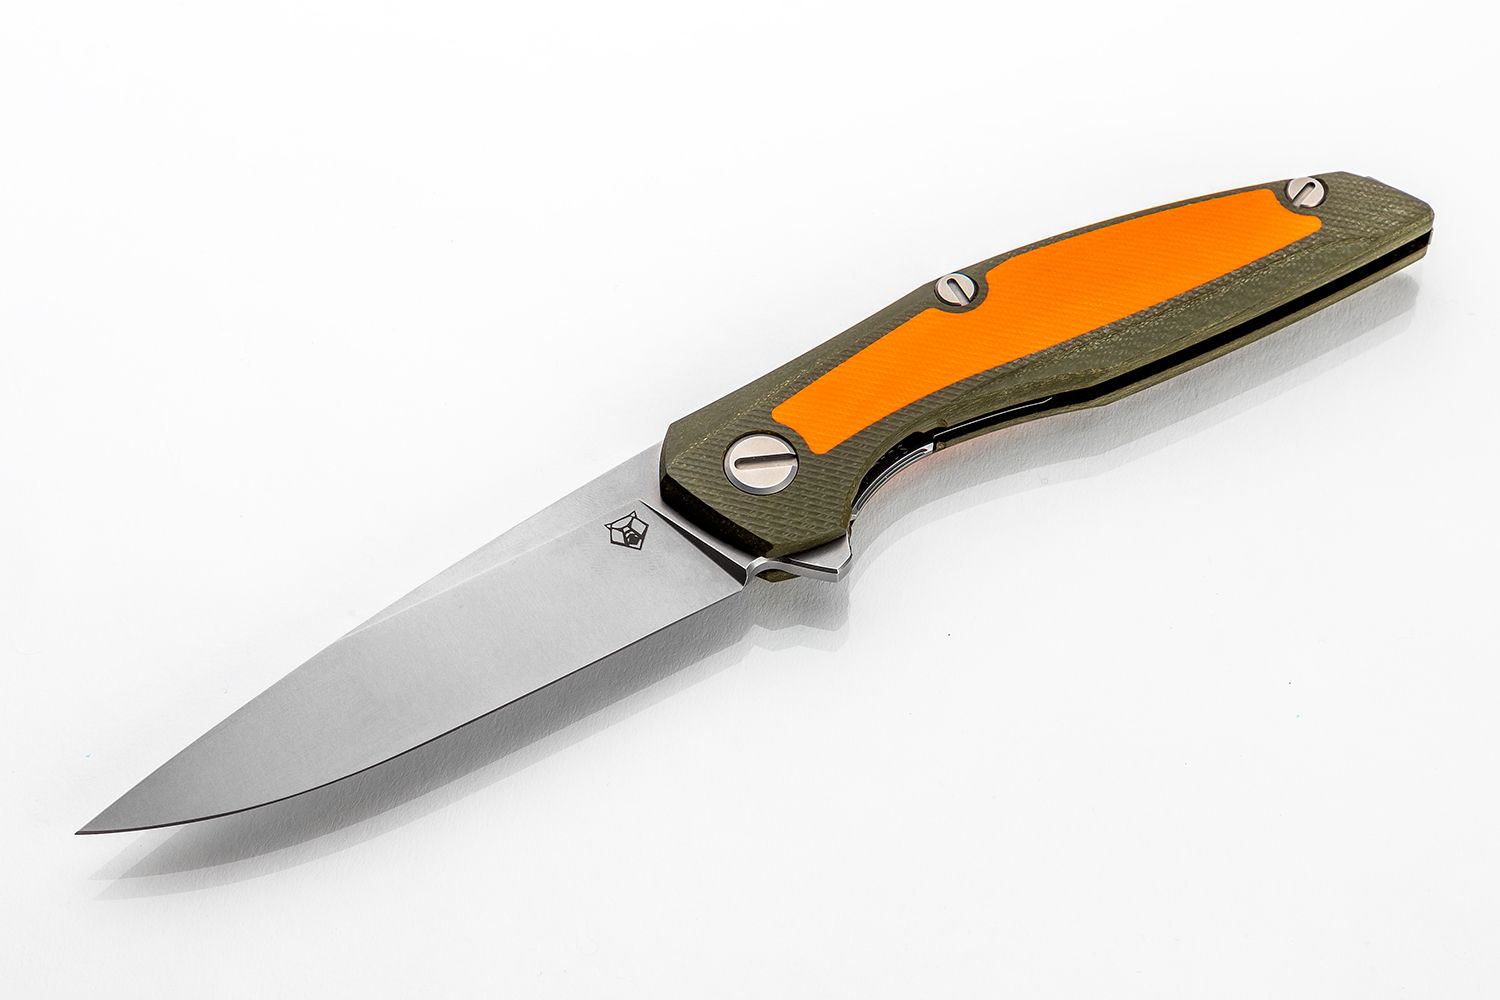 Aeroknife 5 Piece Knife Set orange Handles w/ Display Stand Holder Aero  Knife